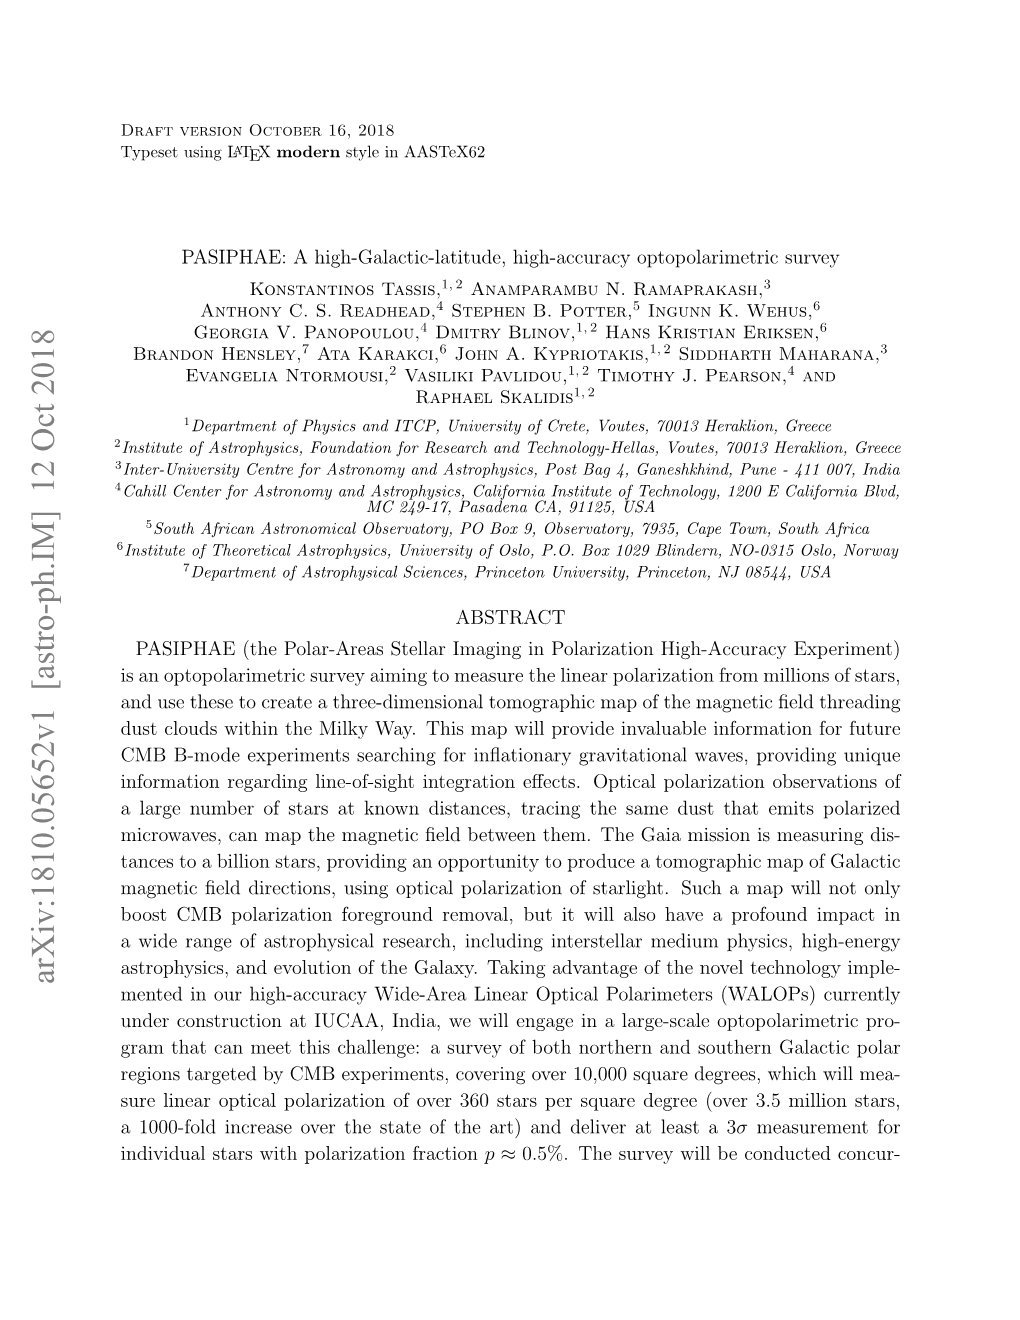 PASIPHAE: a High-Galactic-Latitude, High-Accuracy Optopolarimetric Survey Konstantinos Tassis,1, 2 Anamparambu N